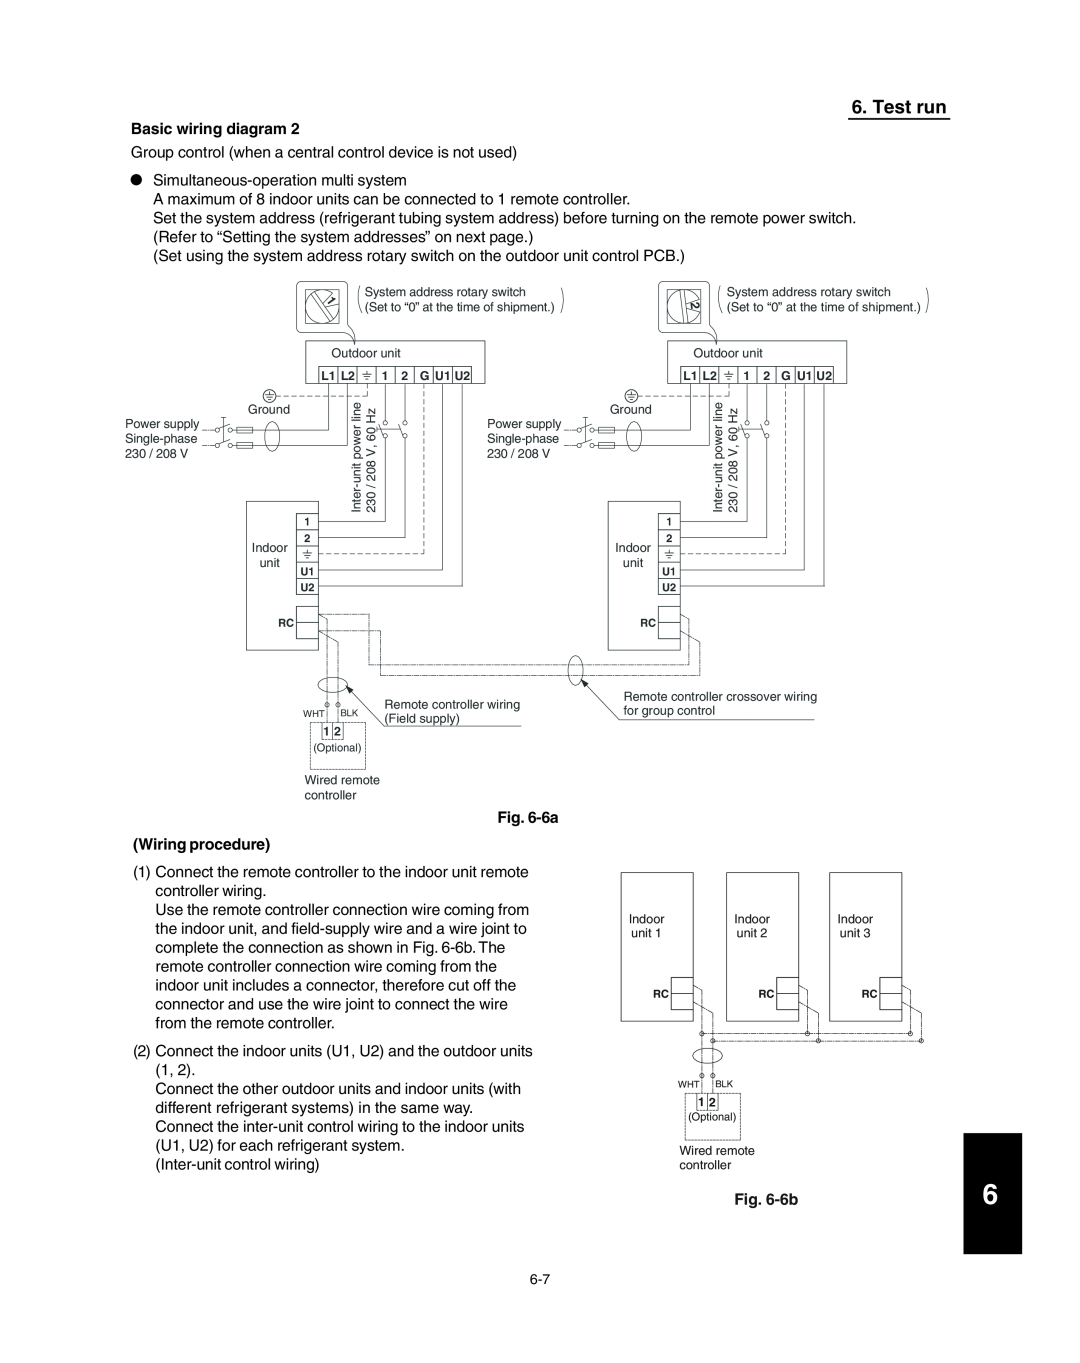 Panasonic R410A service manual Test run, Basic wiring diagram, 6a Wiring procedure, 6b 